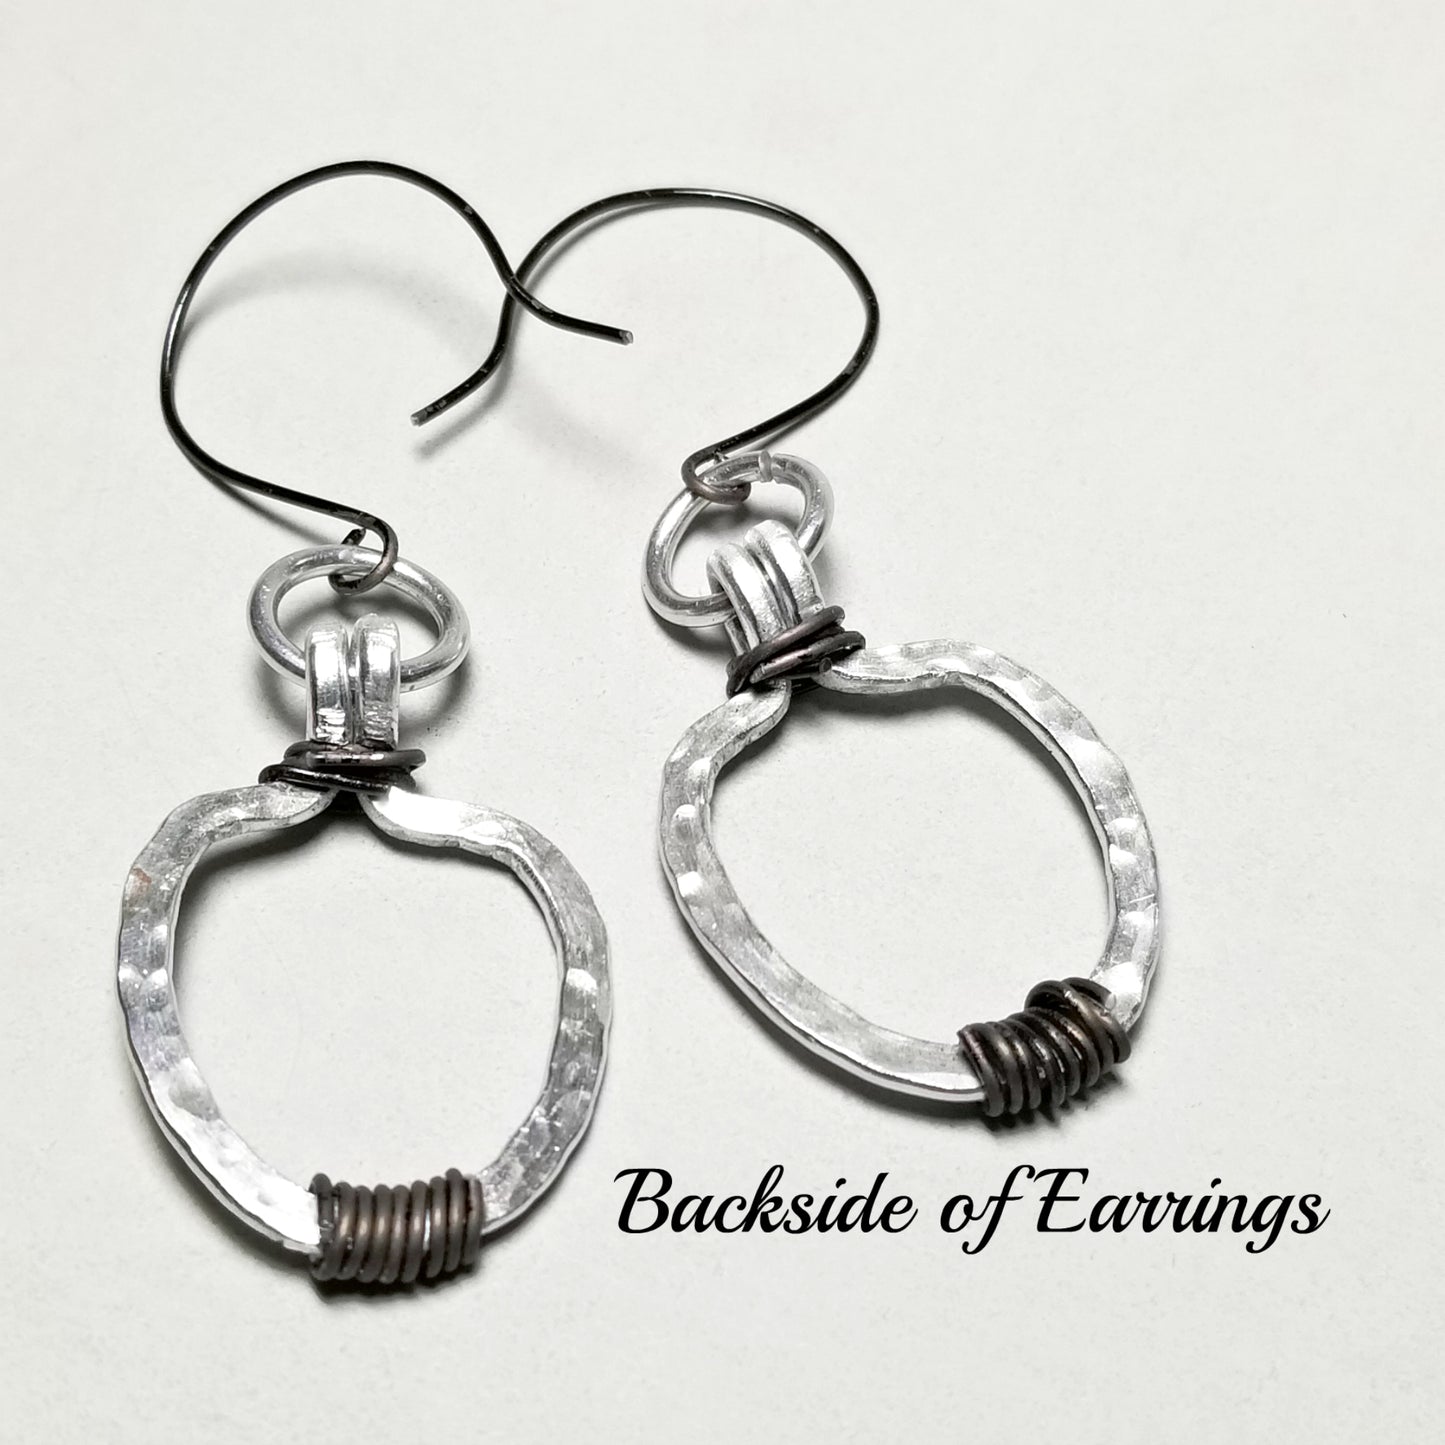 Hammered Aluminum Earrings, Aluminum Wire Jewelry